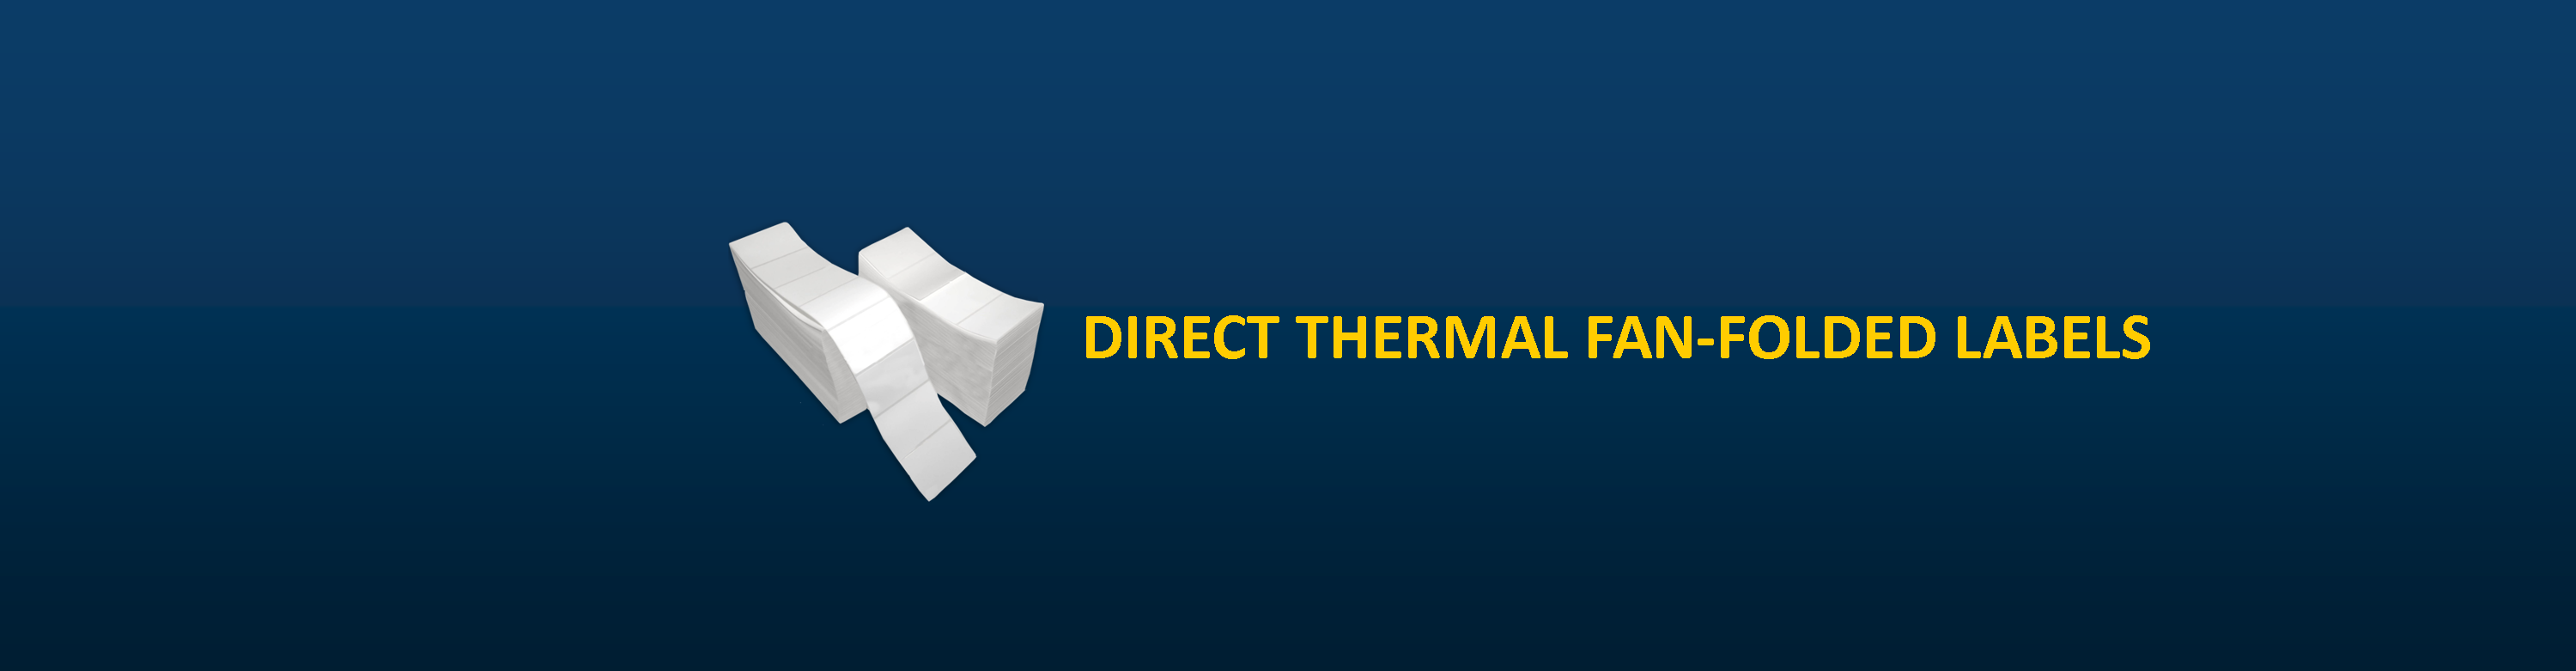 Direct Thermal Fan-Folded Labels